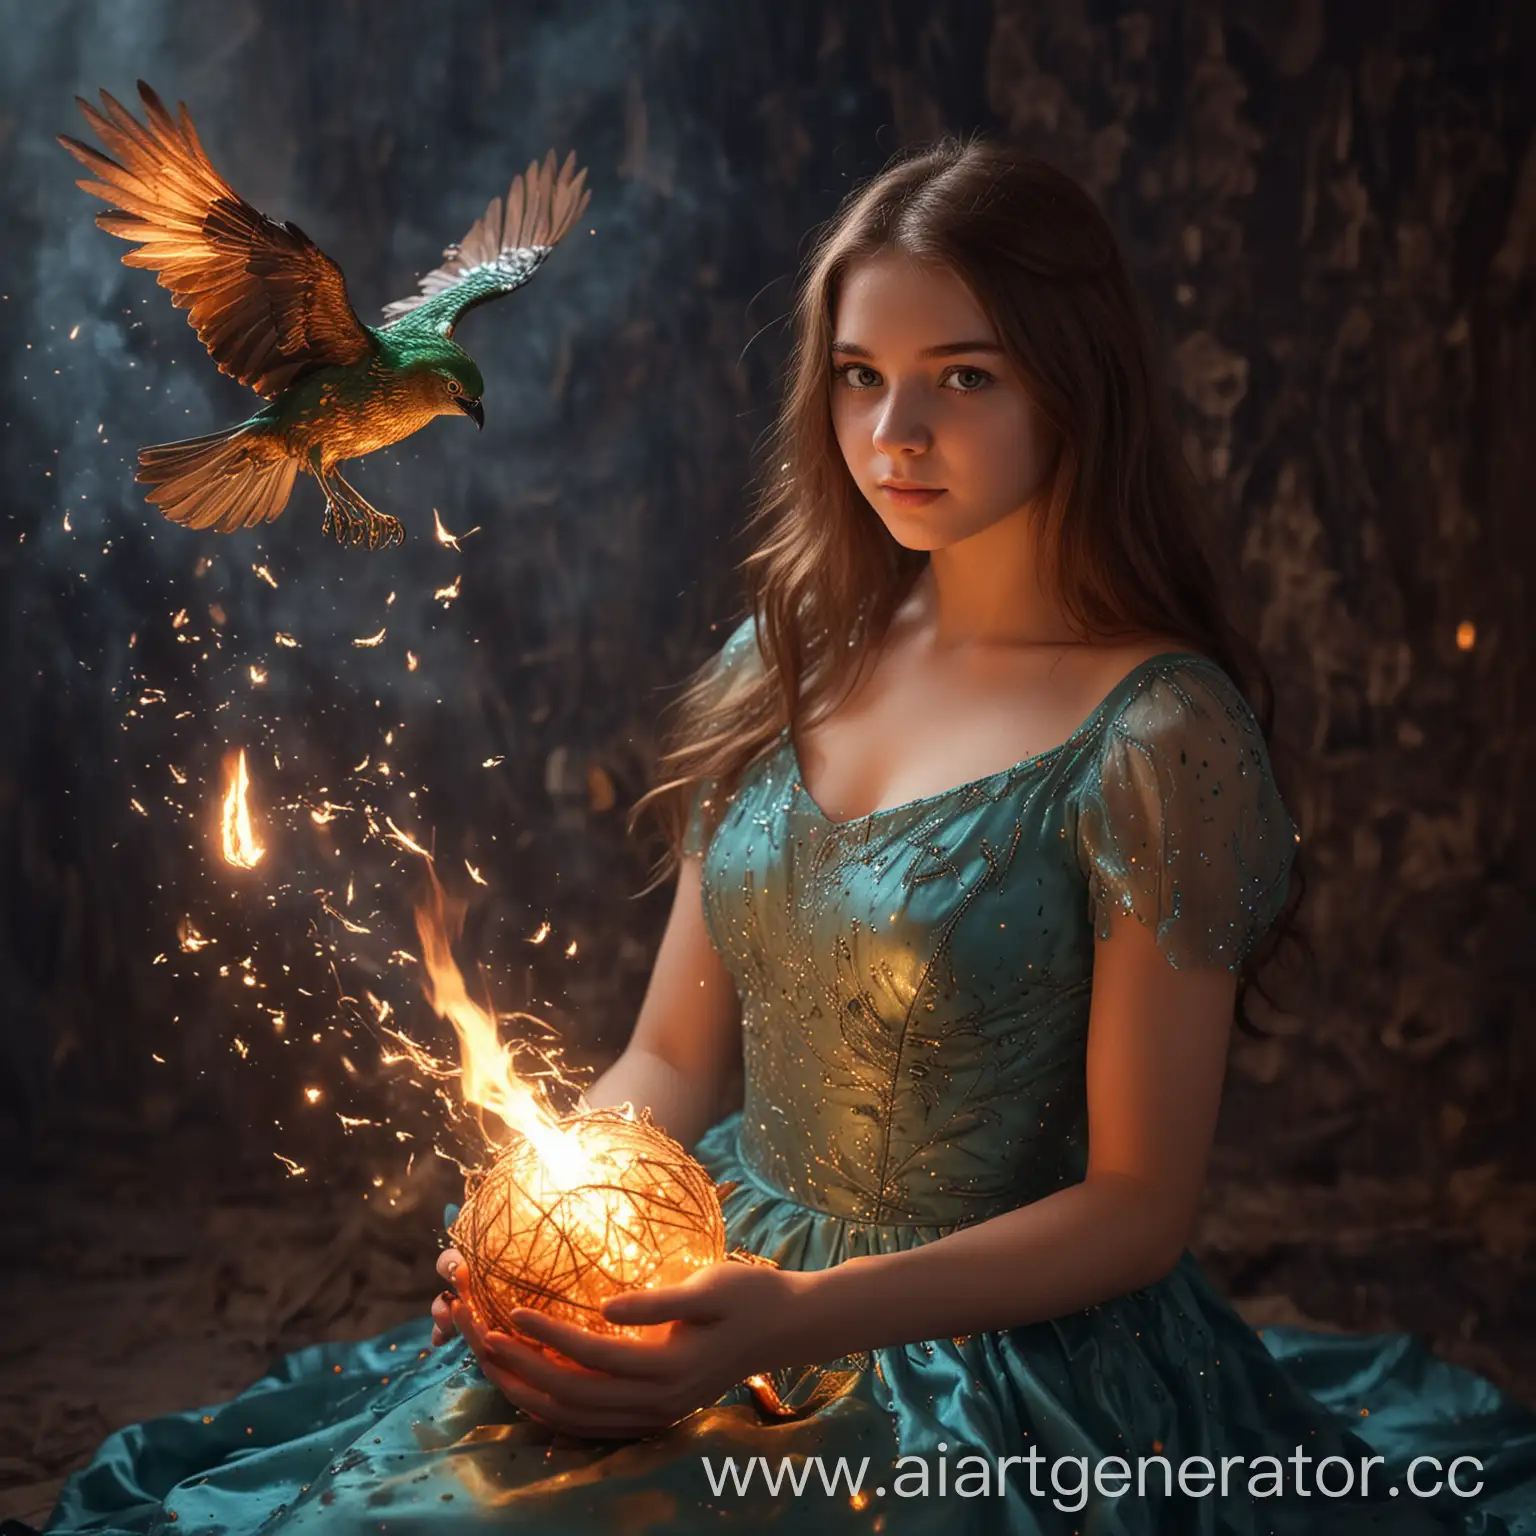 Mystical-Encounter-Enchanting-18YearOld-Girl-with-a-FireBird